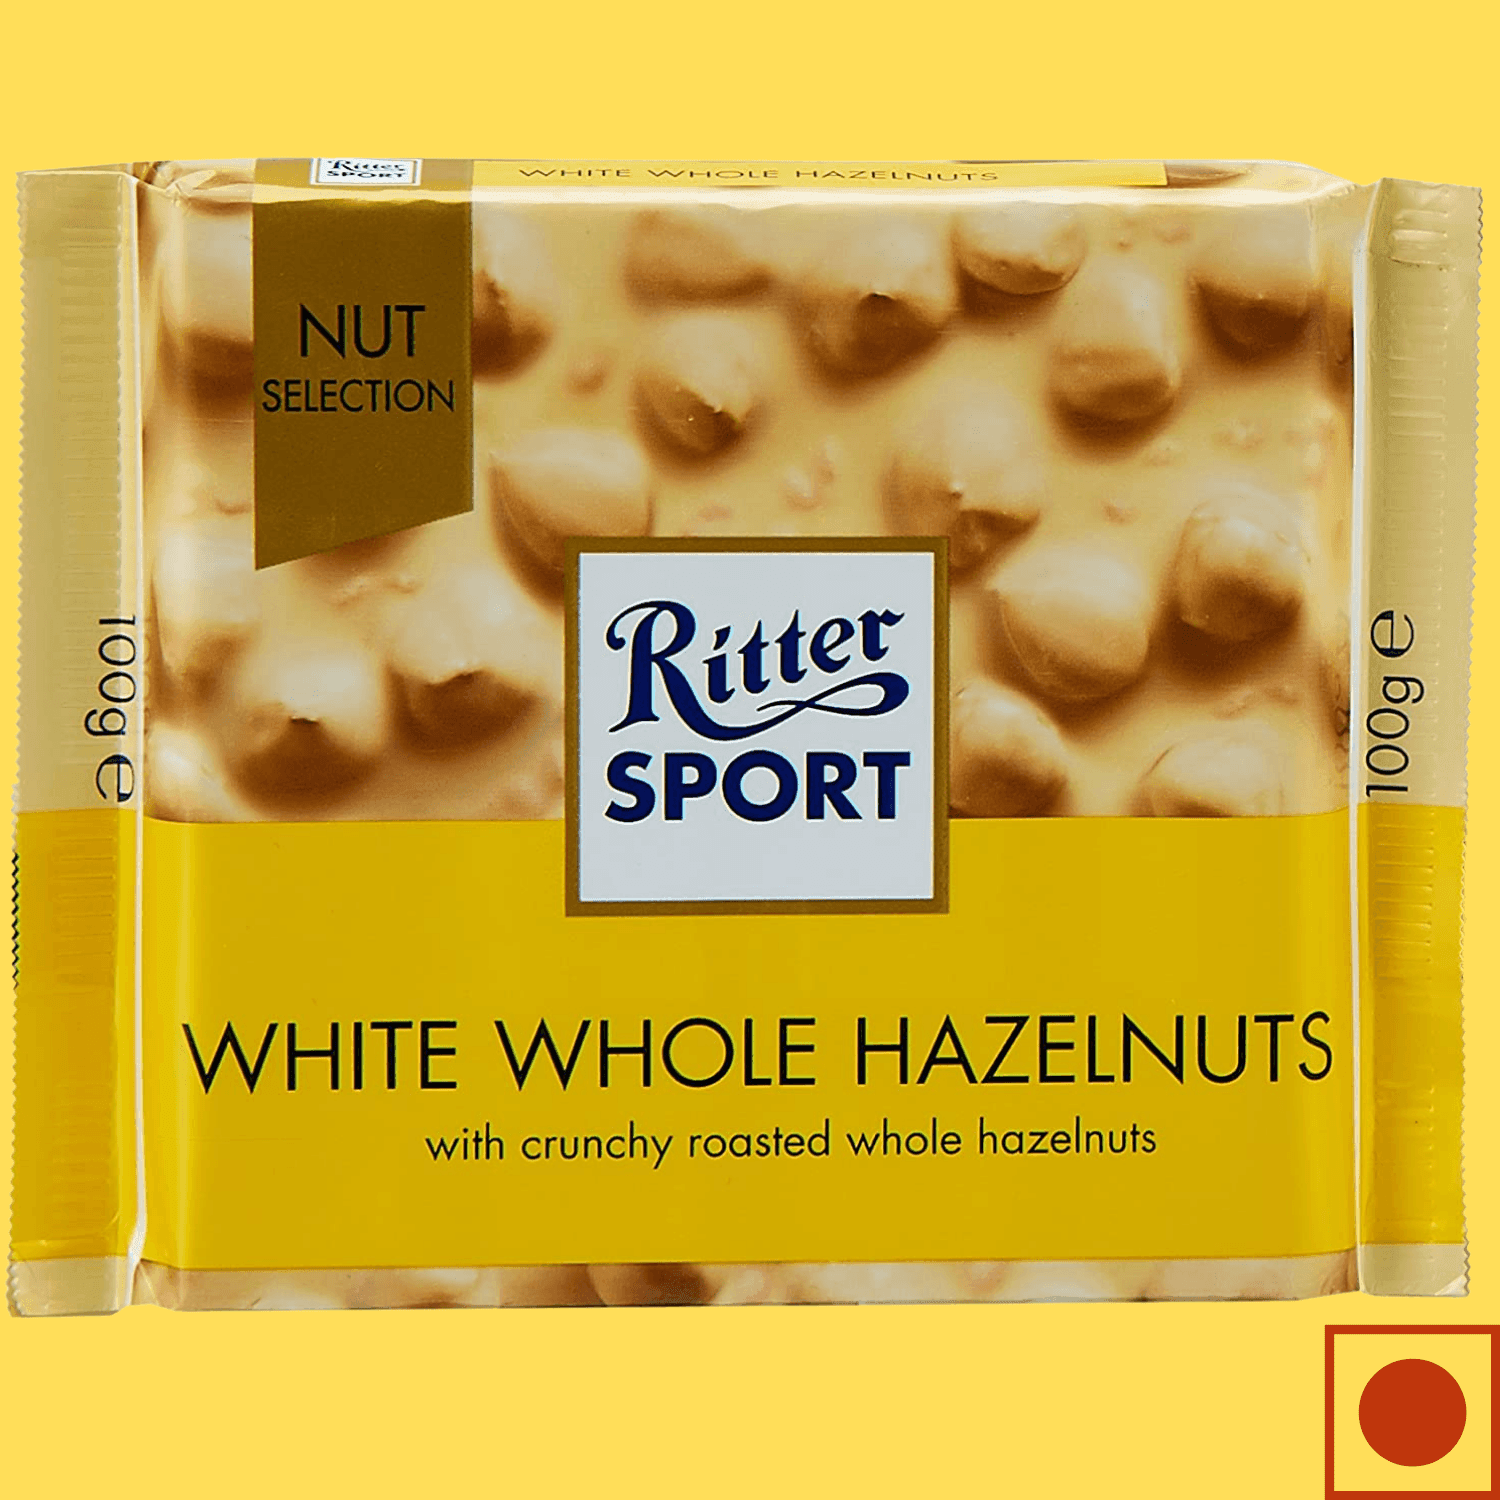 RITTER SPORT WHITE WHOLE HAZELNUTS 100g(Imported) - Super 7 Mart